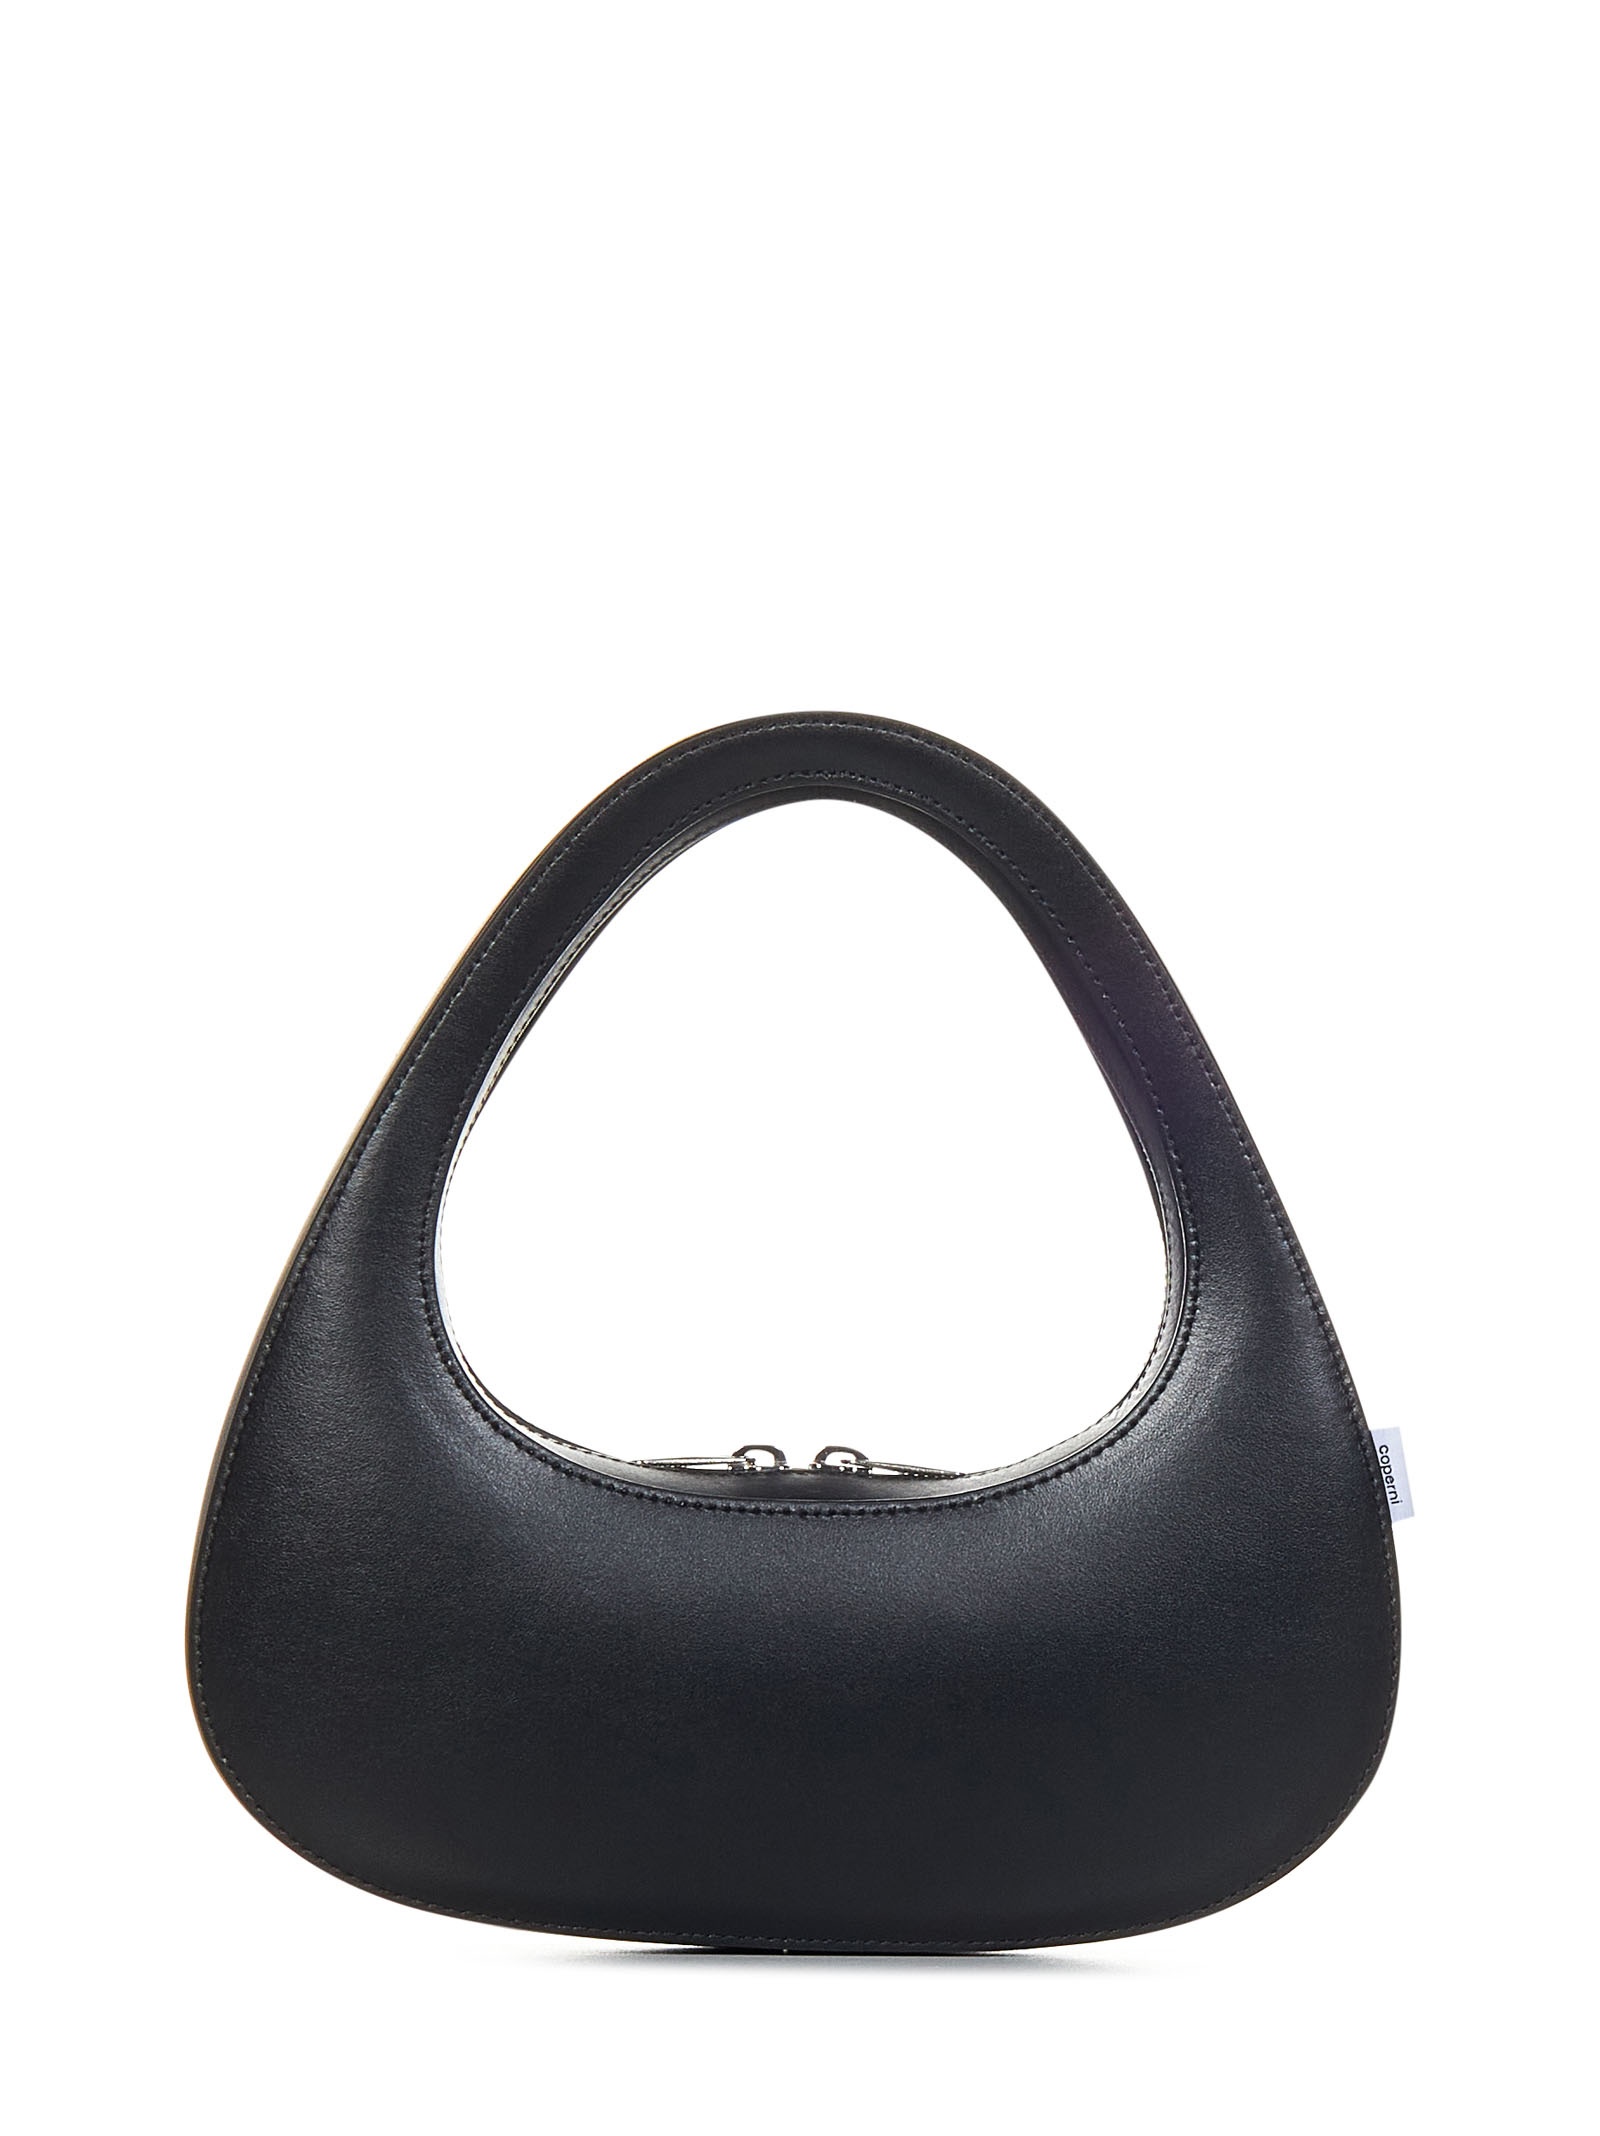 Black calfskin curved triangular baguette bag with silver-foil print logo at front. - 3